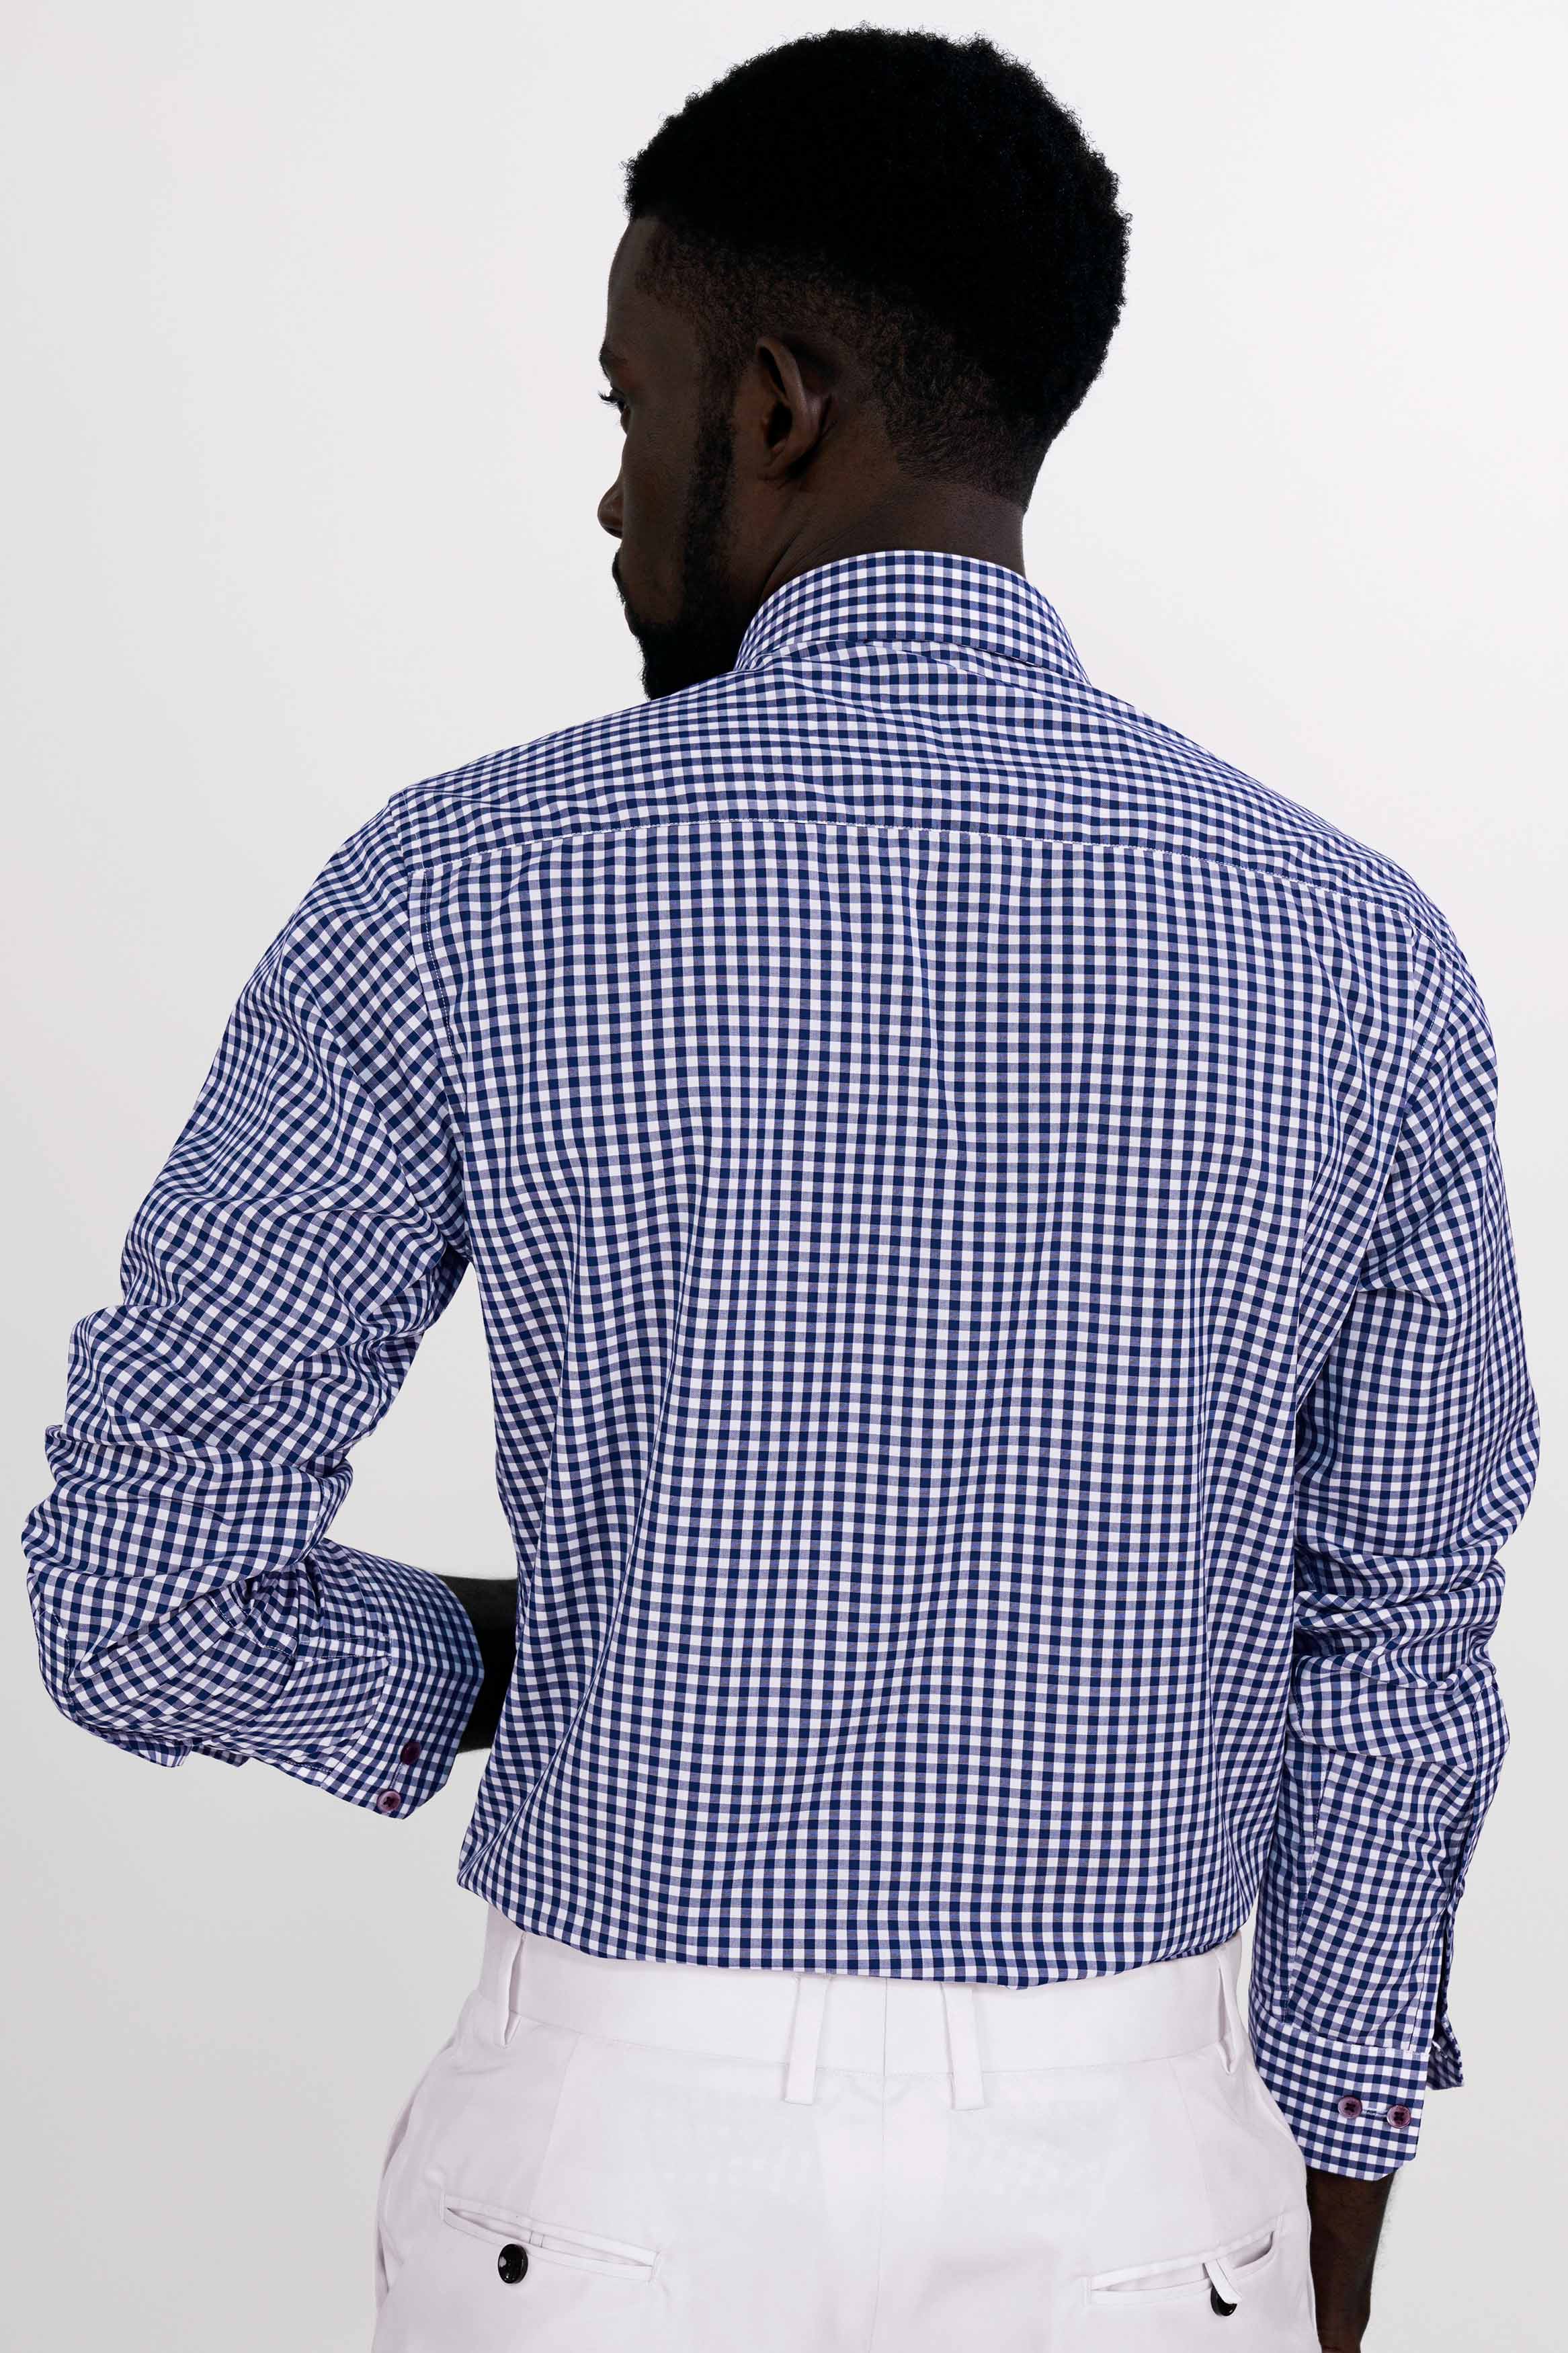 Bright White and Biscay Blue Gingham Checkered Premium Cotton Shirt